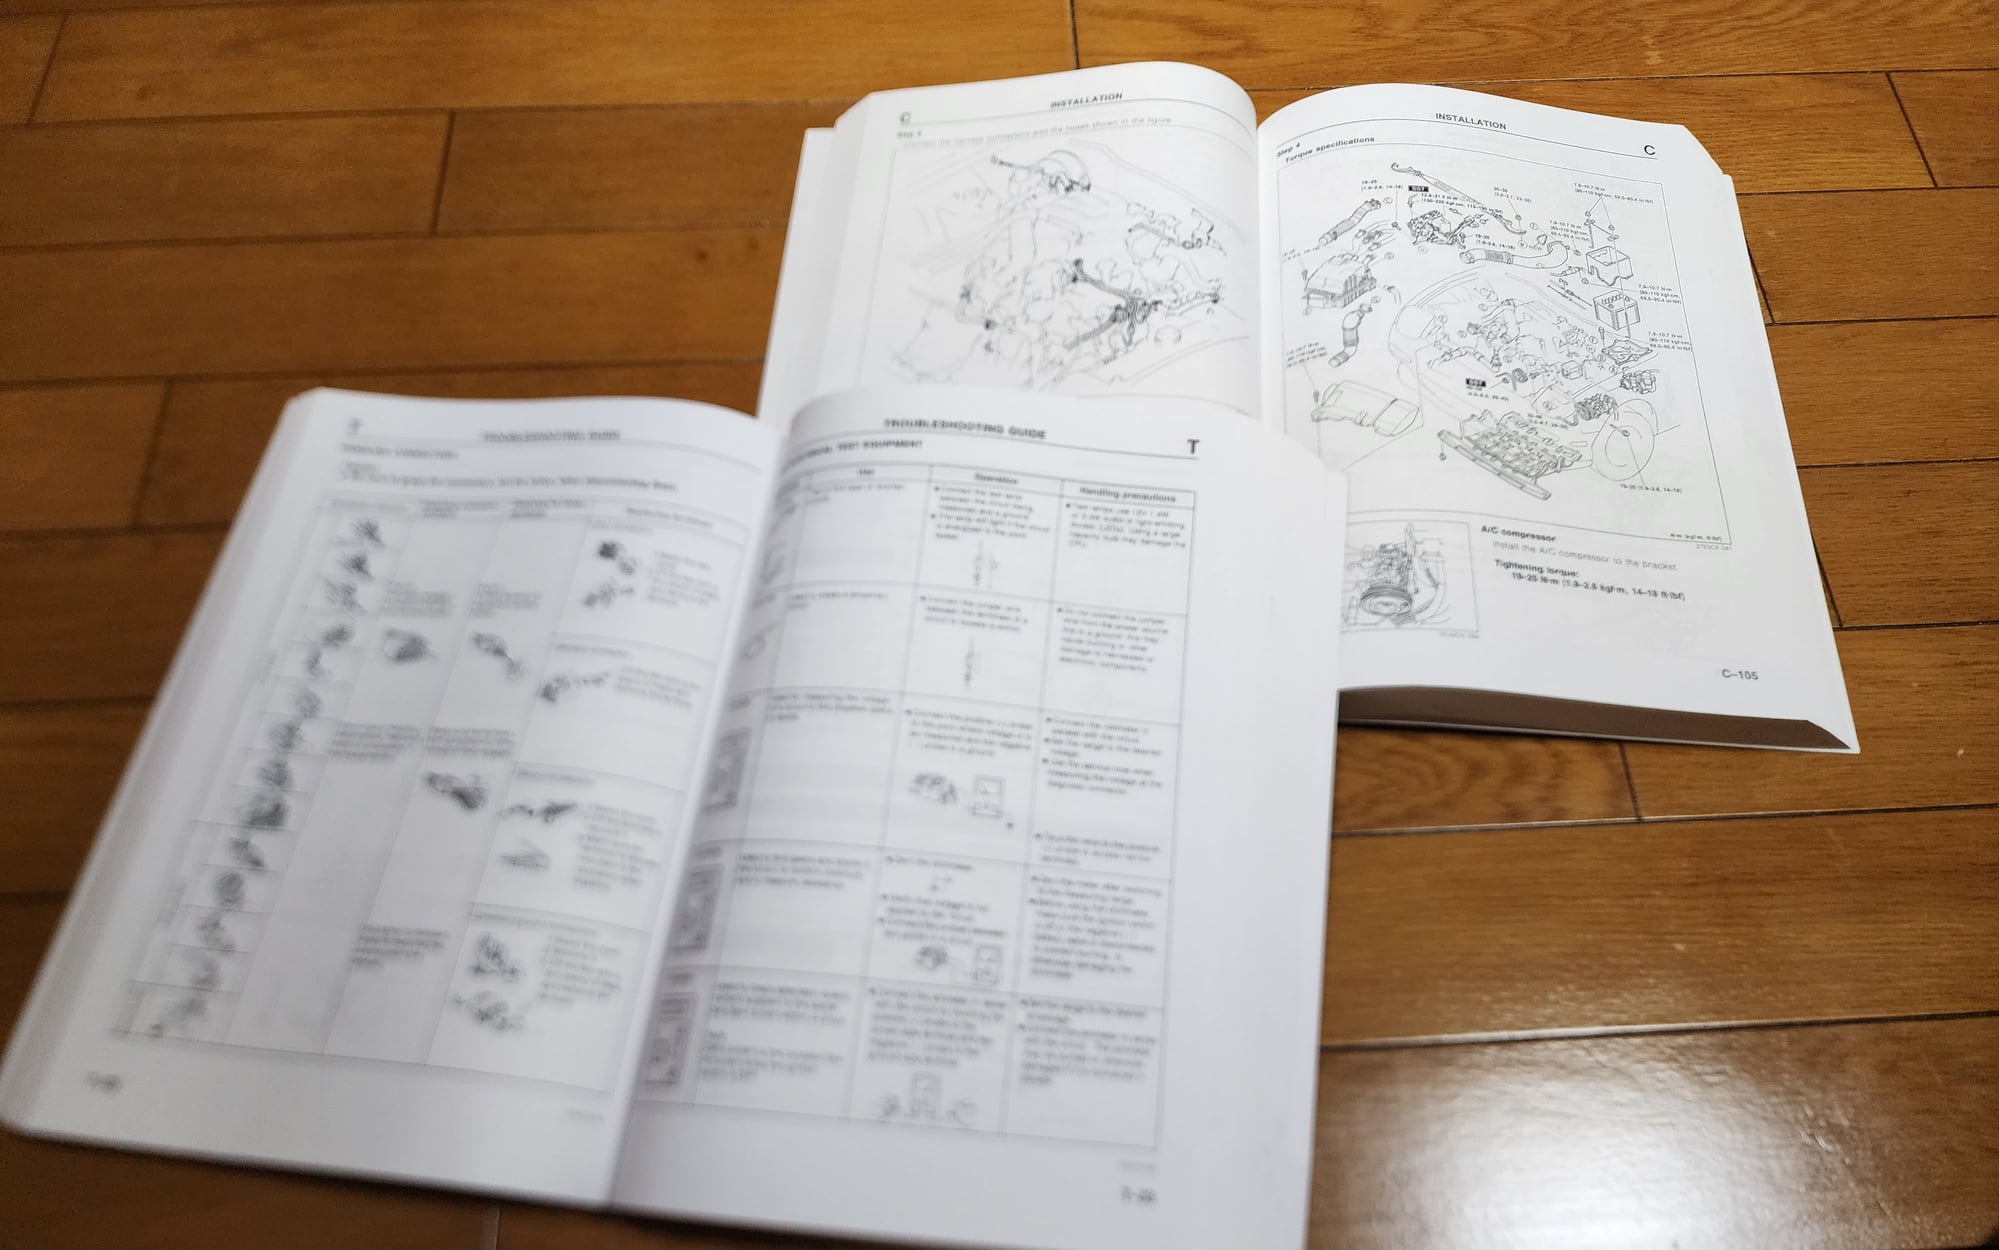 Accessories - Super Rare Australian RHD English Workshop Manuals - Used - 1992 to 1997 Mazda RX-7 - Okinawa City, Japan